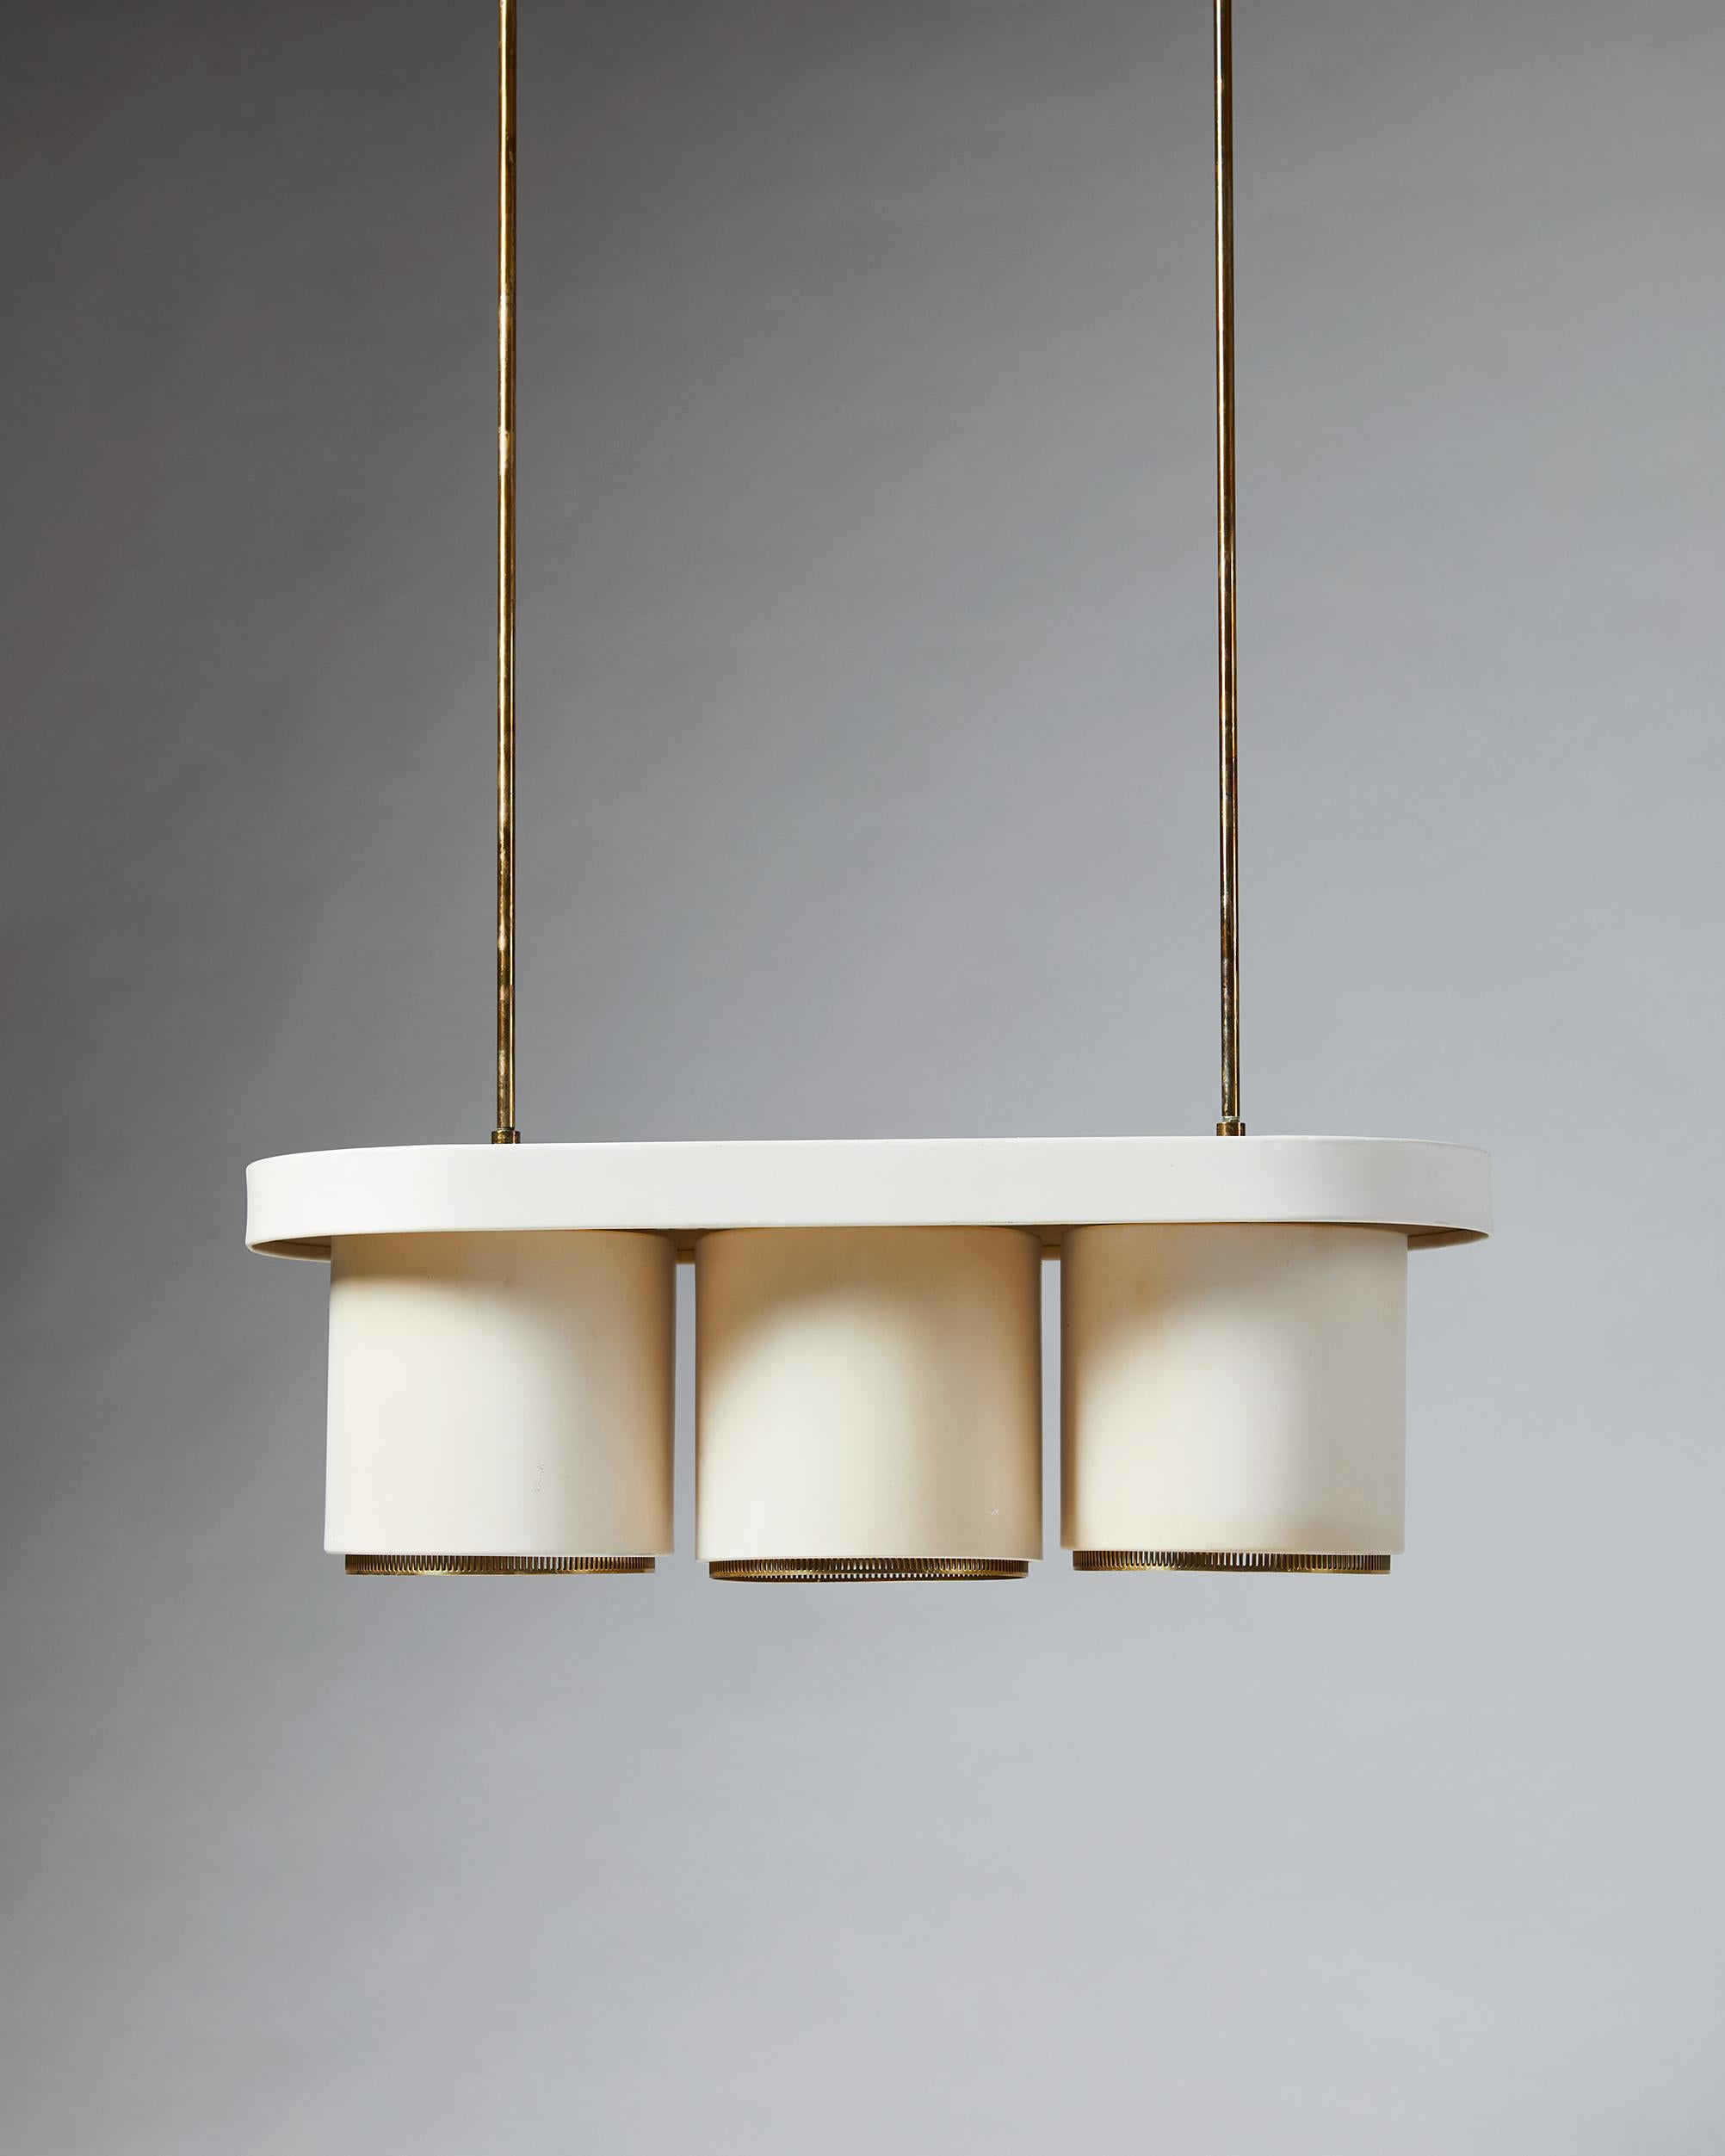 Scandinavian Modern Ceiling Lamp, Model A203, Designed by Alvar Aalto for Valaistustyö